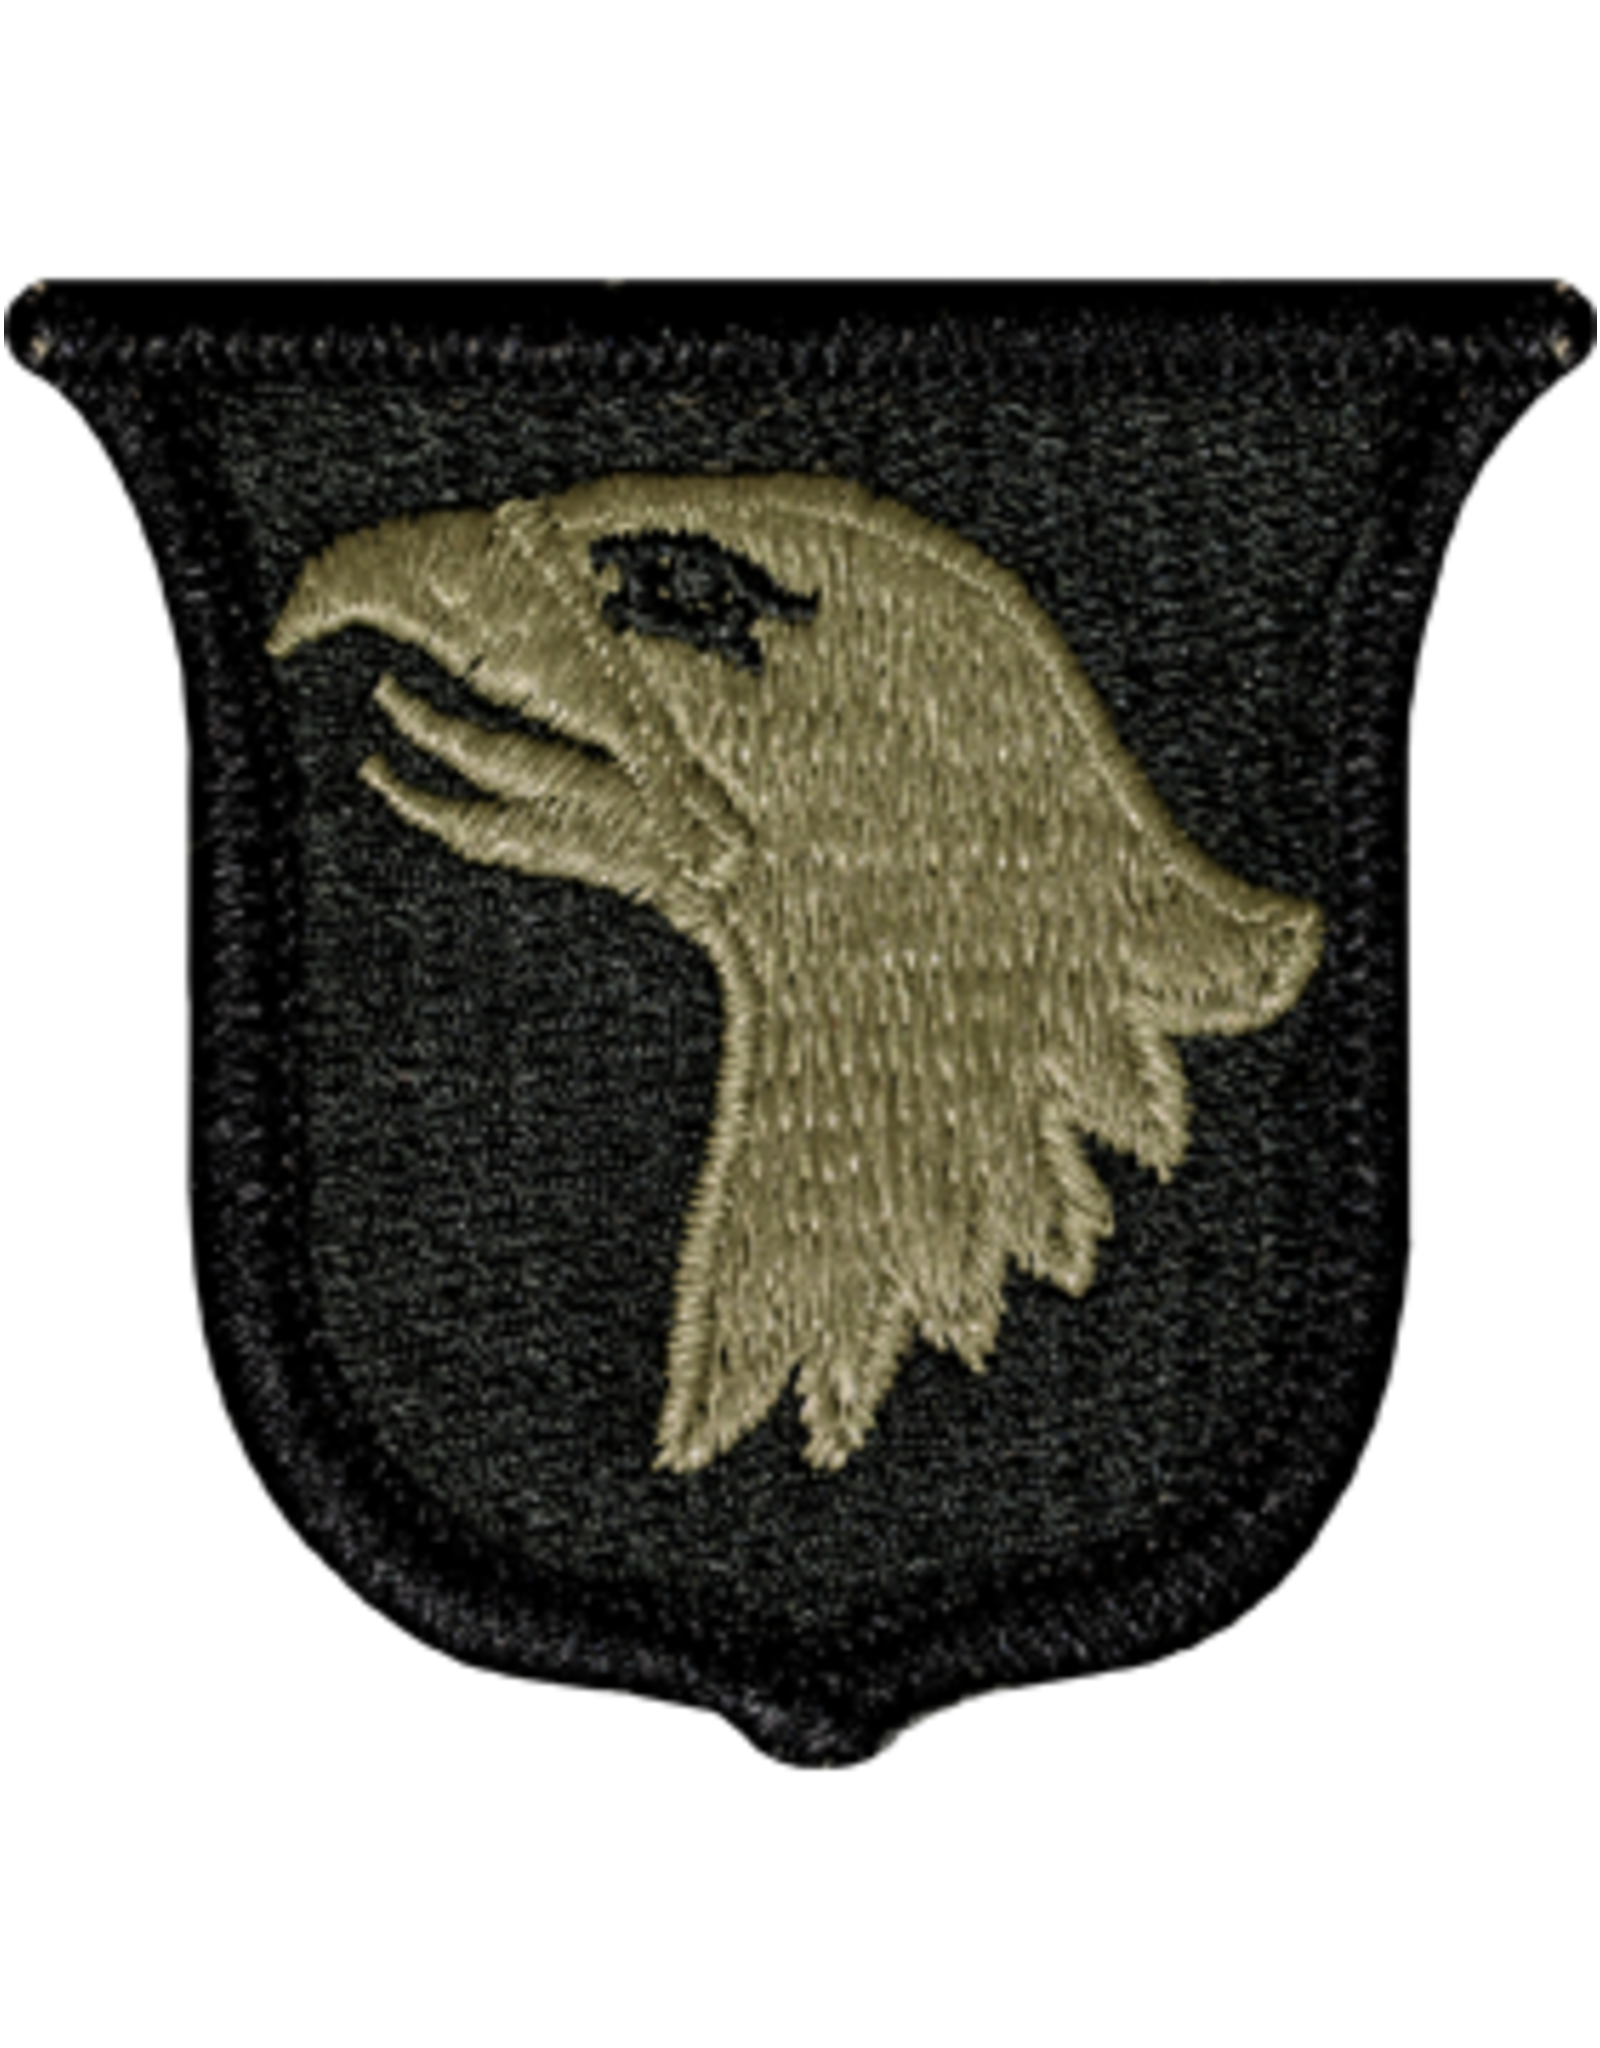 101st Airborne Patch